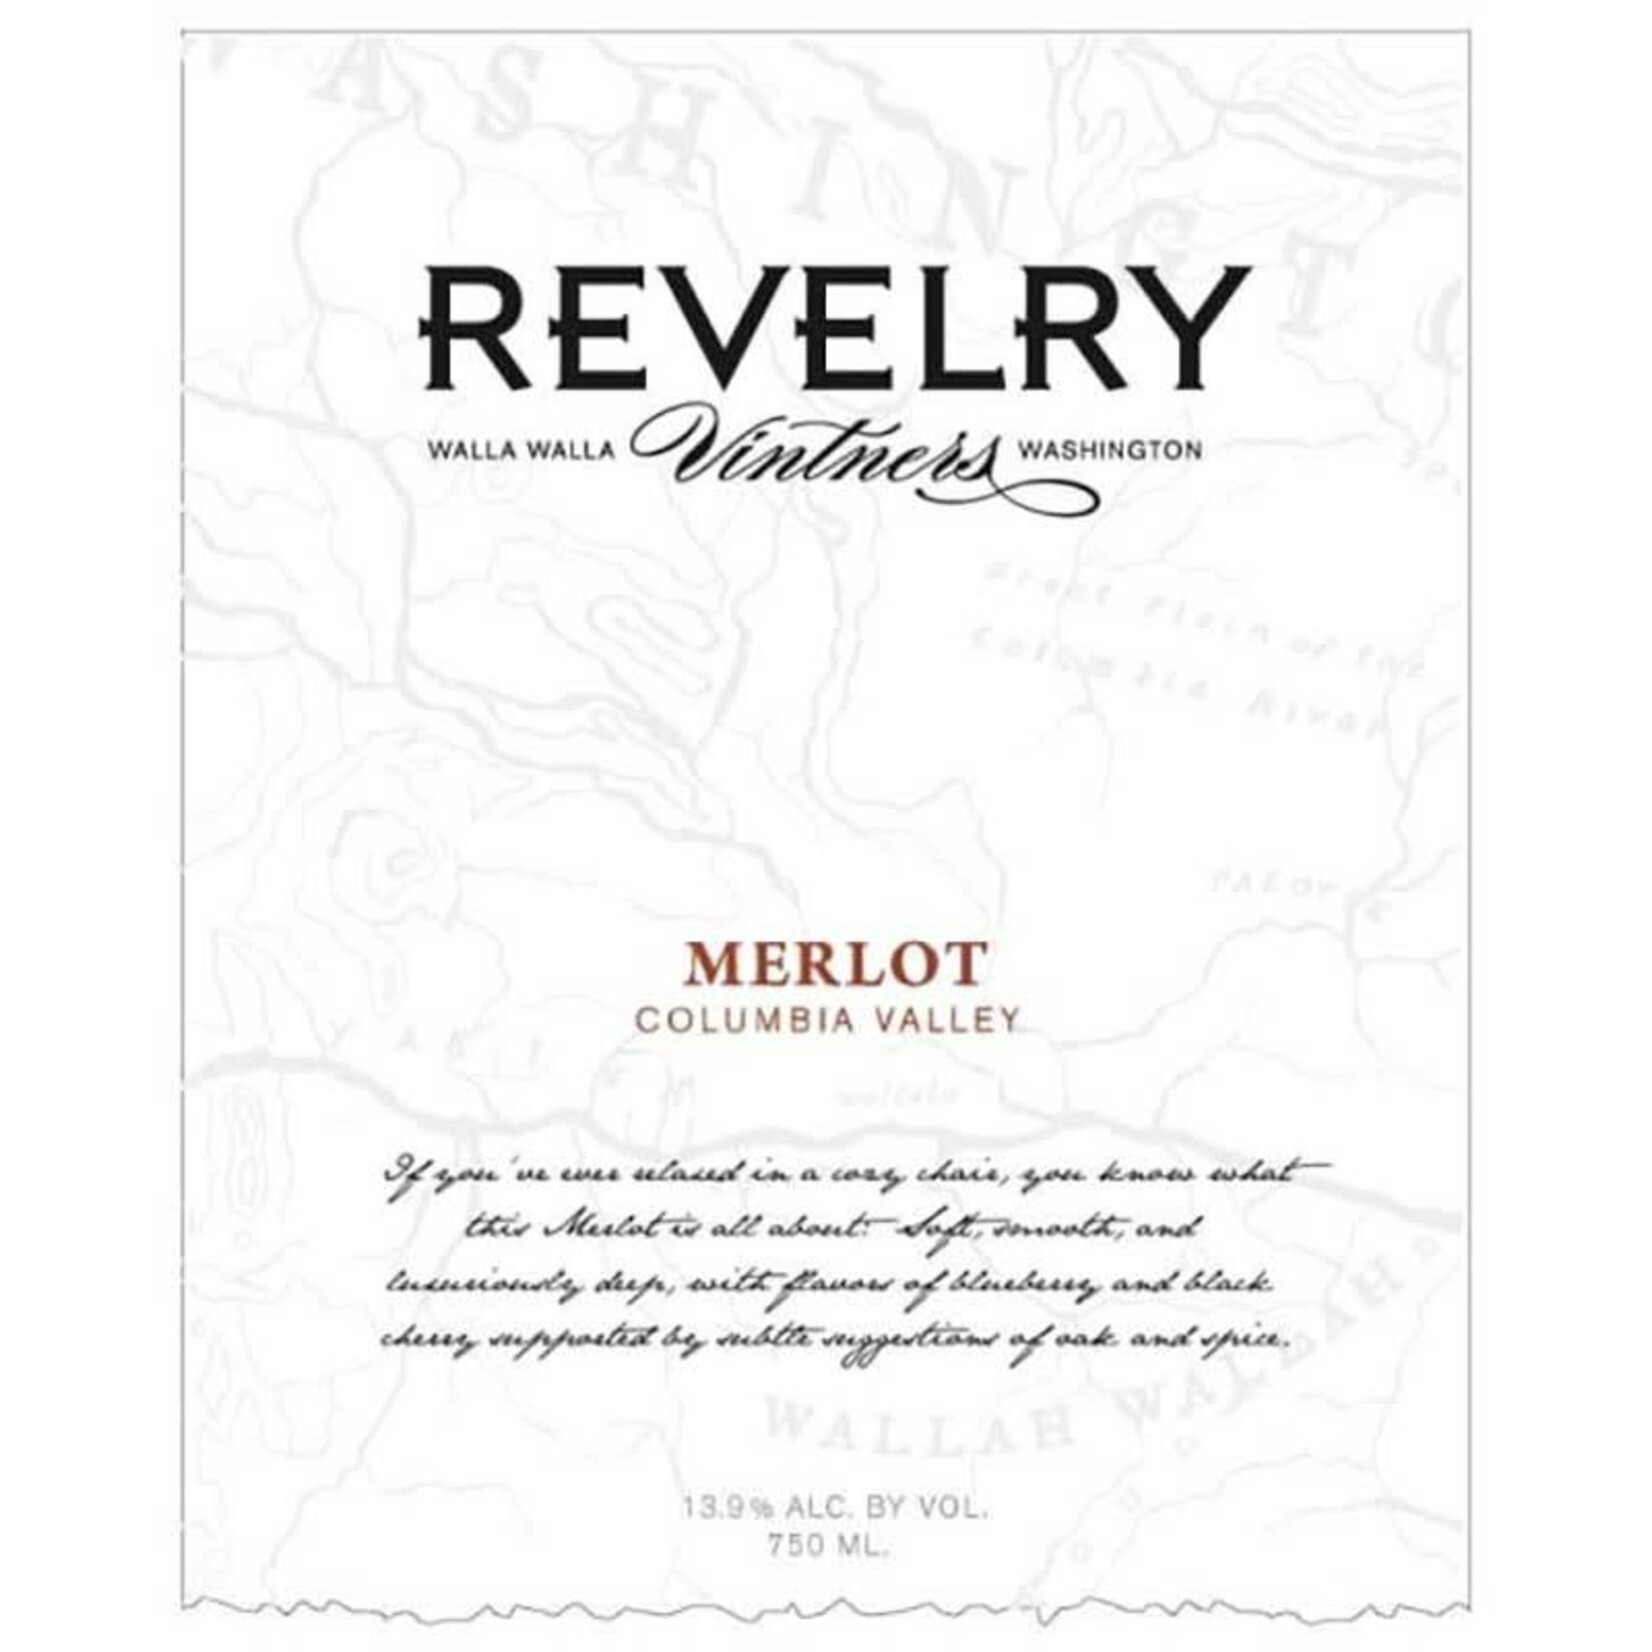 Revelry Vintners Revelry Vintners Merlot 2018  Columbia Valley, Washington